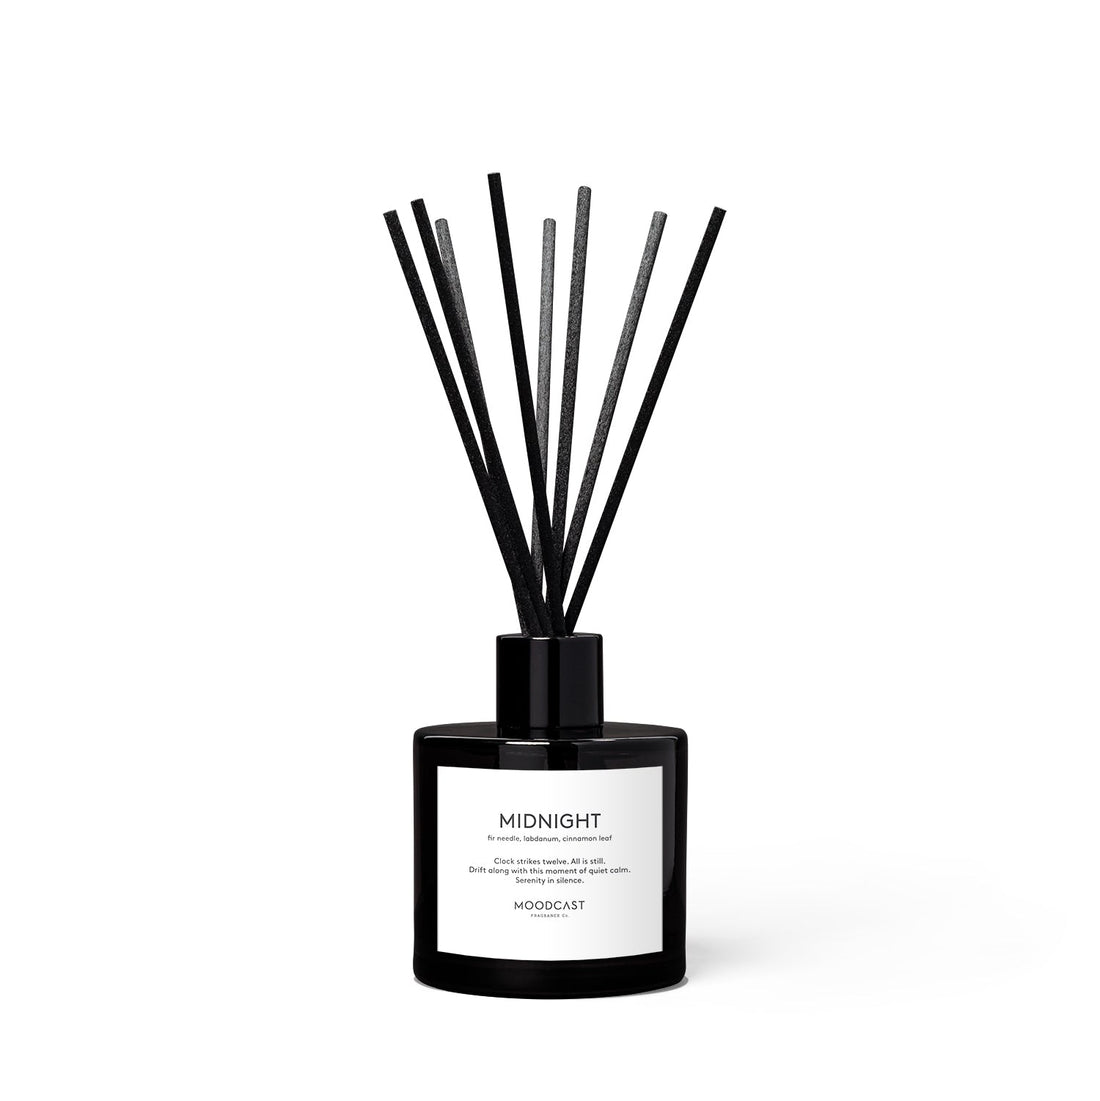 Midnight - Night & Day Collection (Black & White) - 3.4fl oz/100ml Glass Reed Diffuser - Key Notes: Fir Needle, Labdanum, Cinnamon Leaf